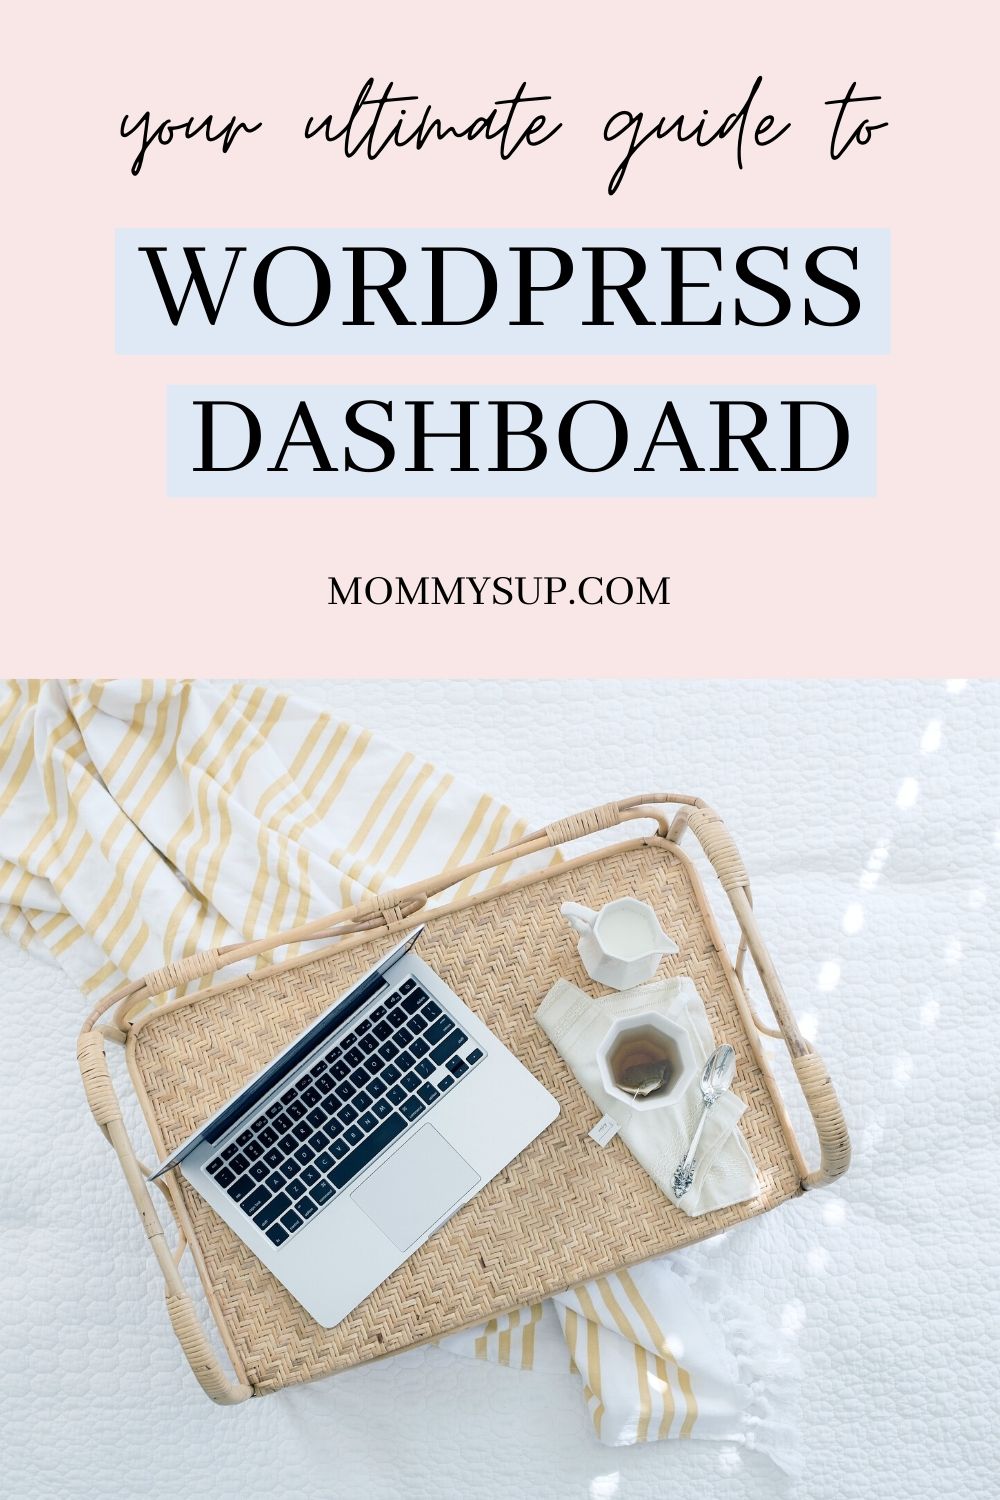 WordPress Dashboard guide for beginners